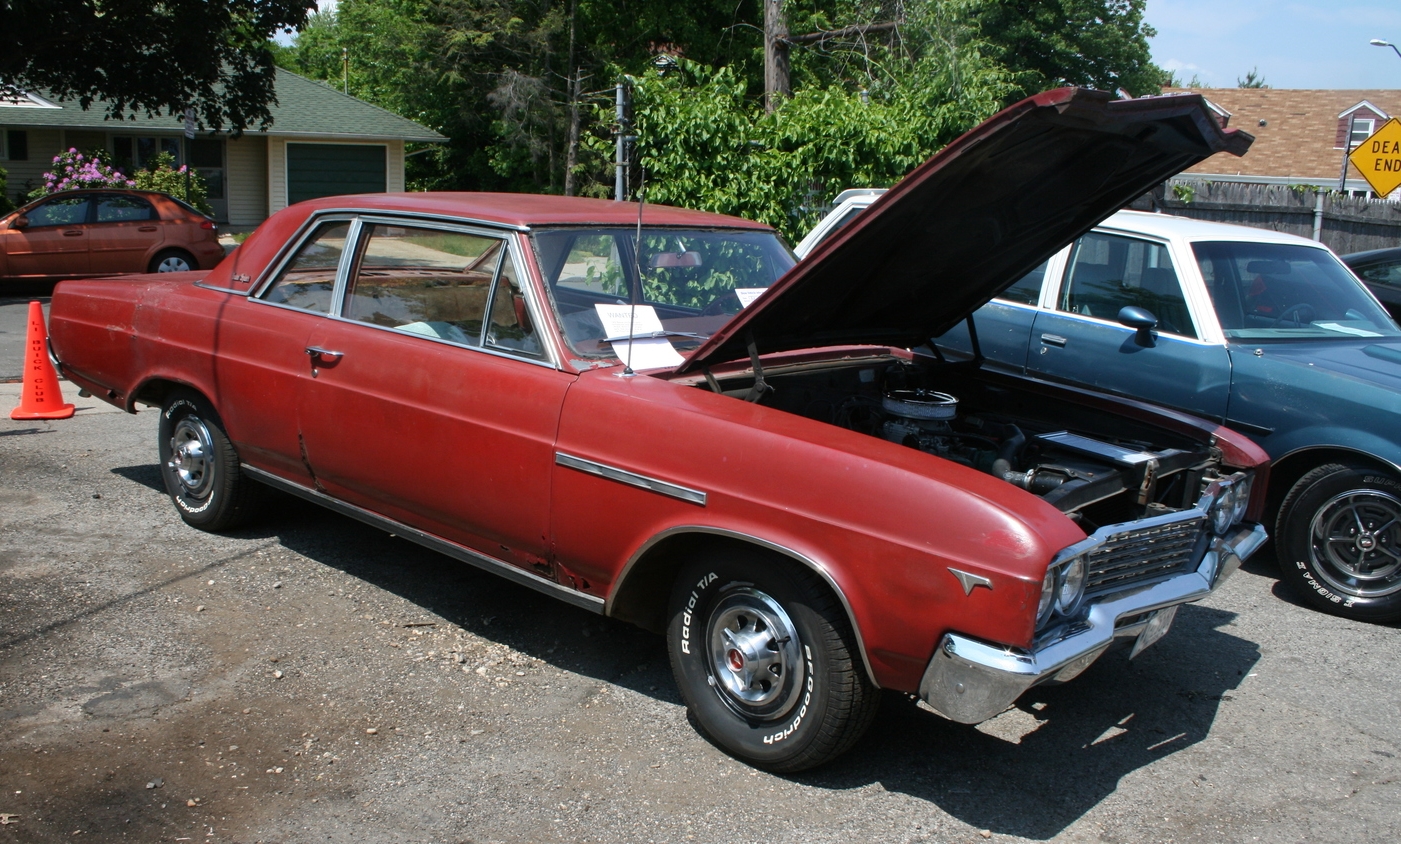 Tony & Karen Gatta: 1965 Skylark 2 Door Coupe